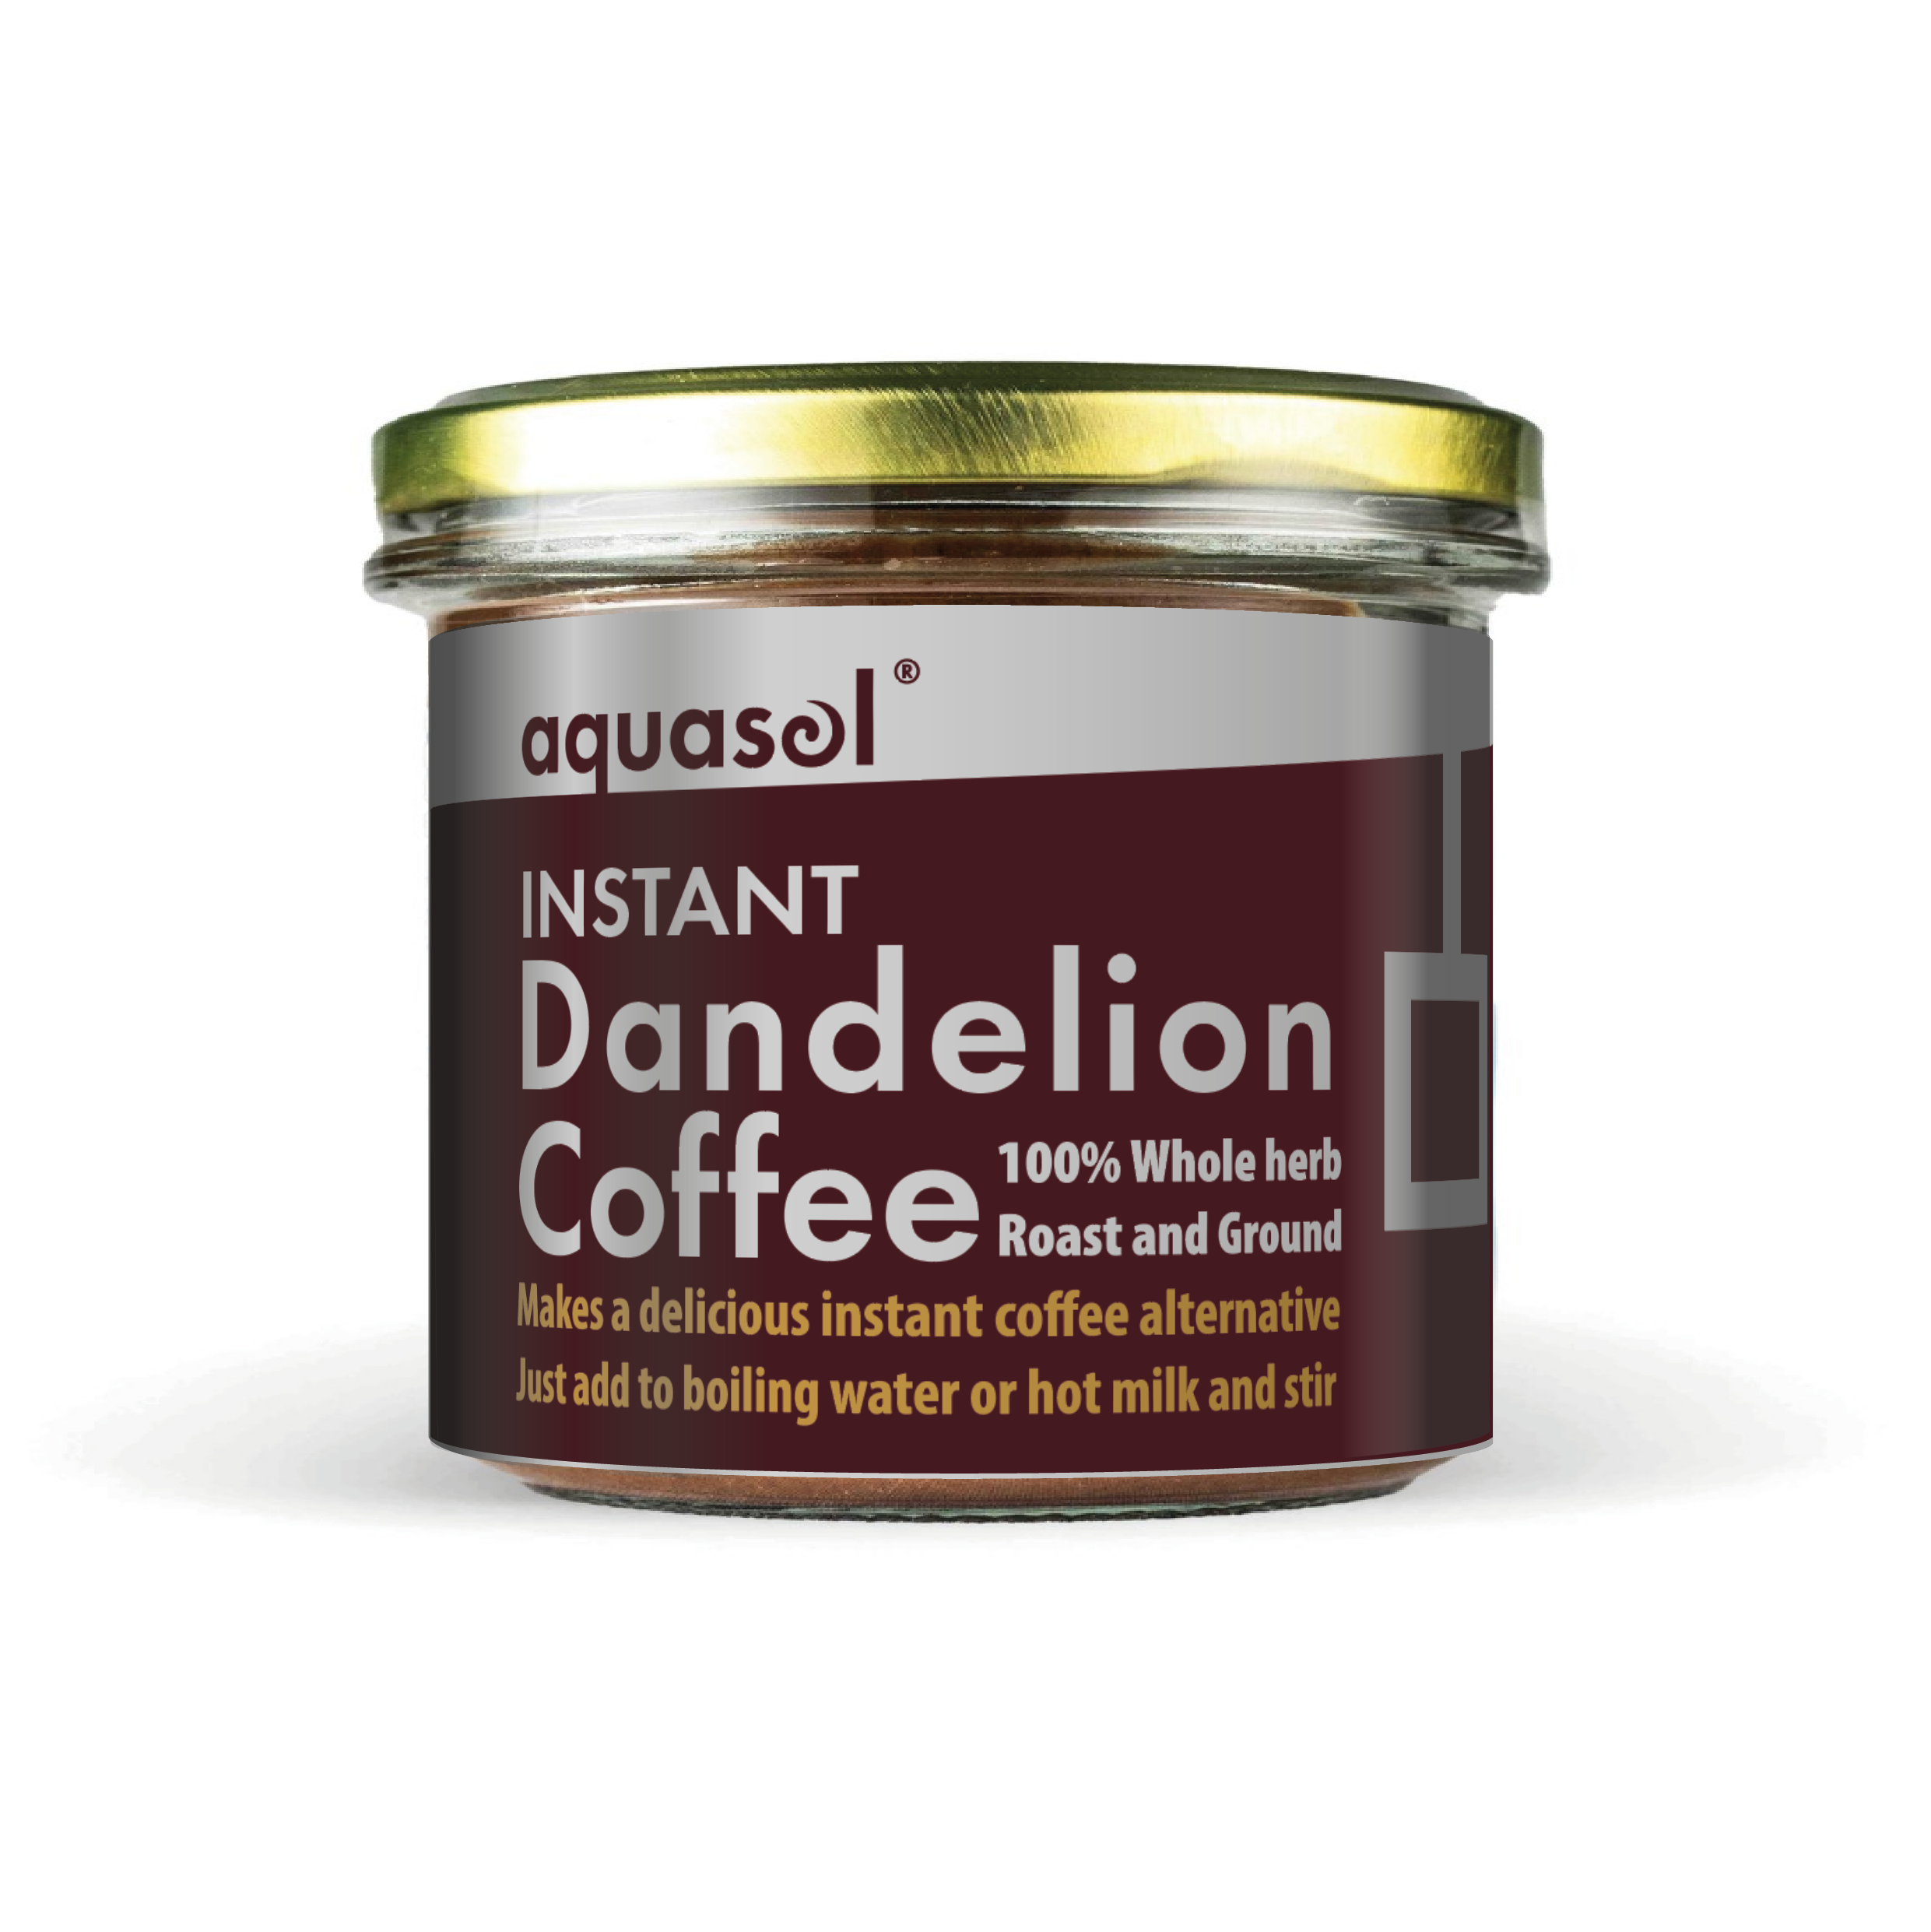 Aqualsol Dandelion Coffee Instant 50g